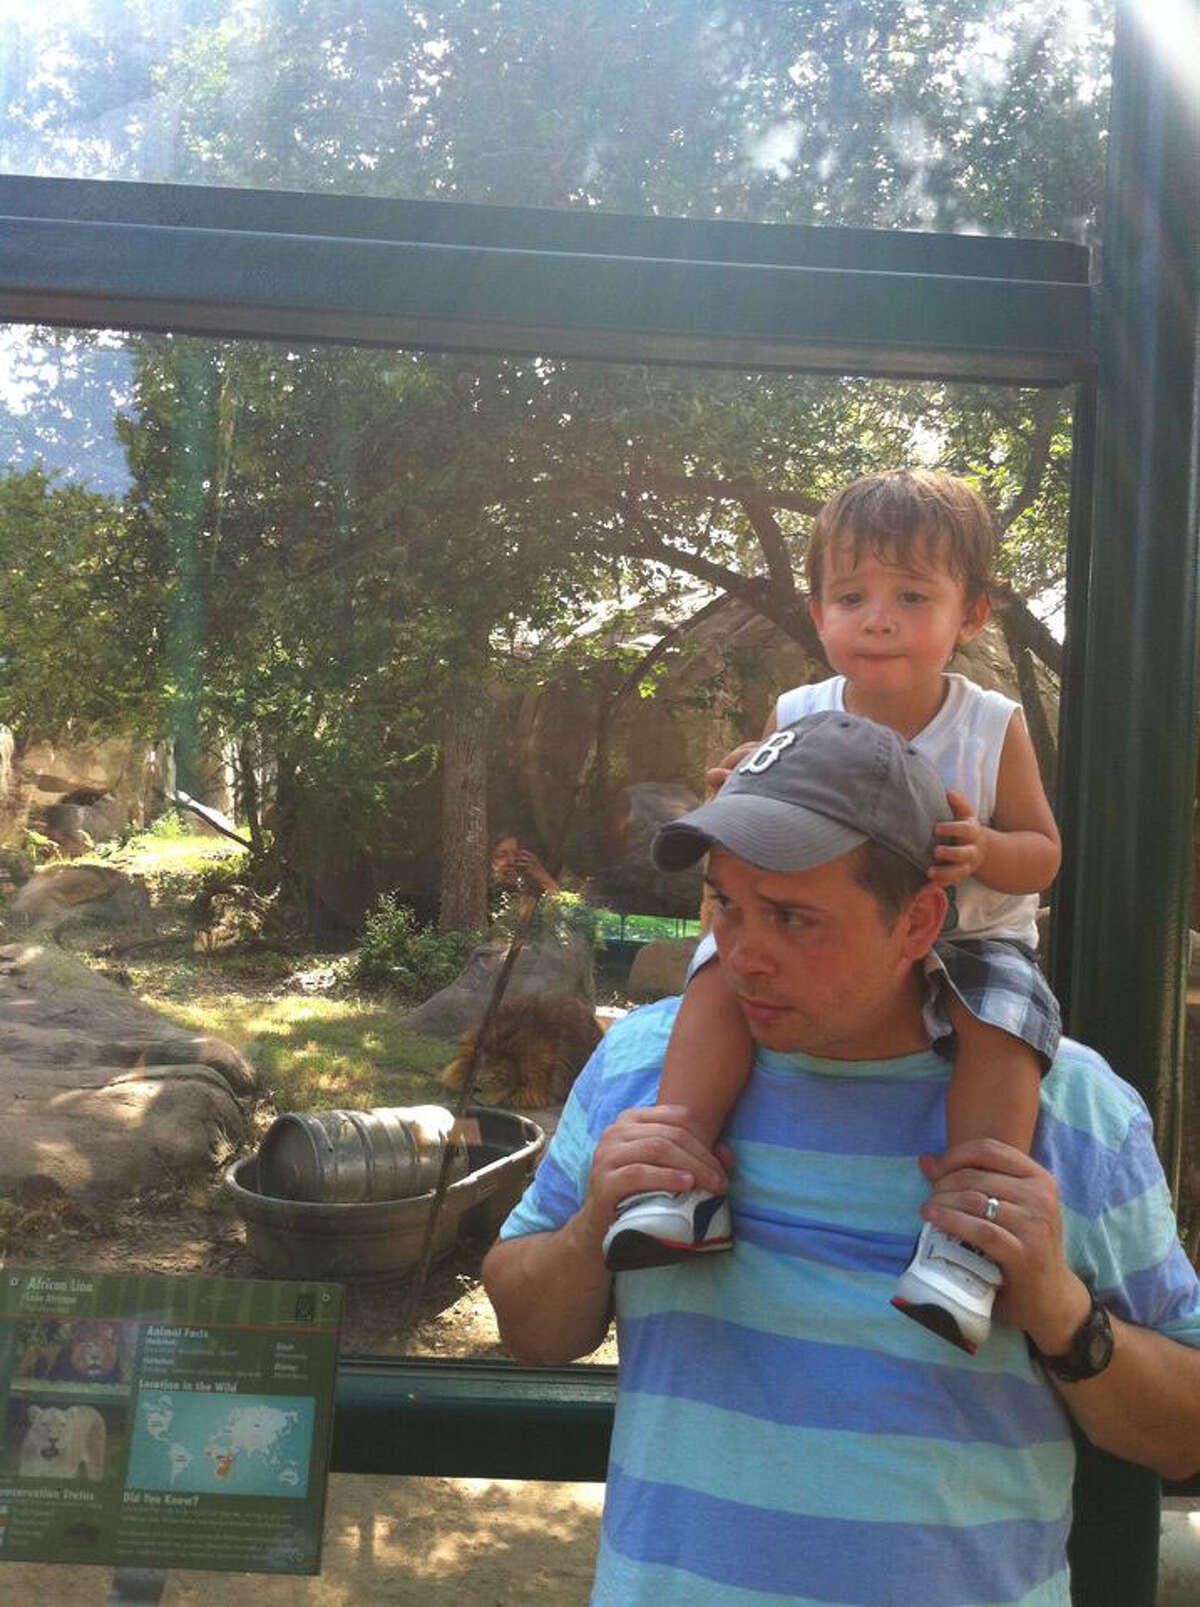 Chris Brann with his son Nico at the Houston Zoo in 2011. Image courtesy of Chris Brann